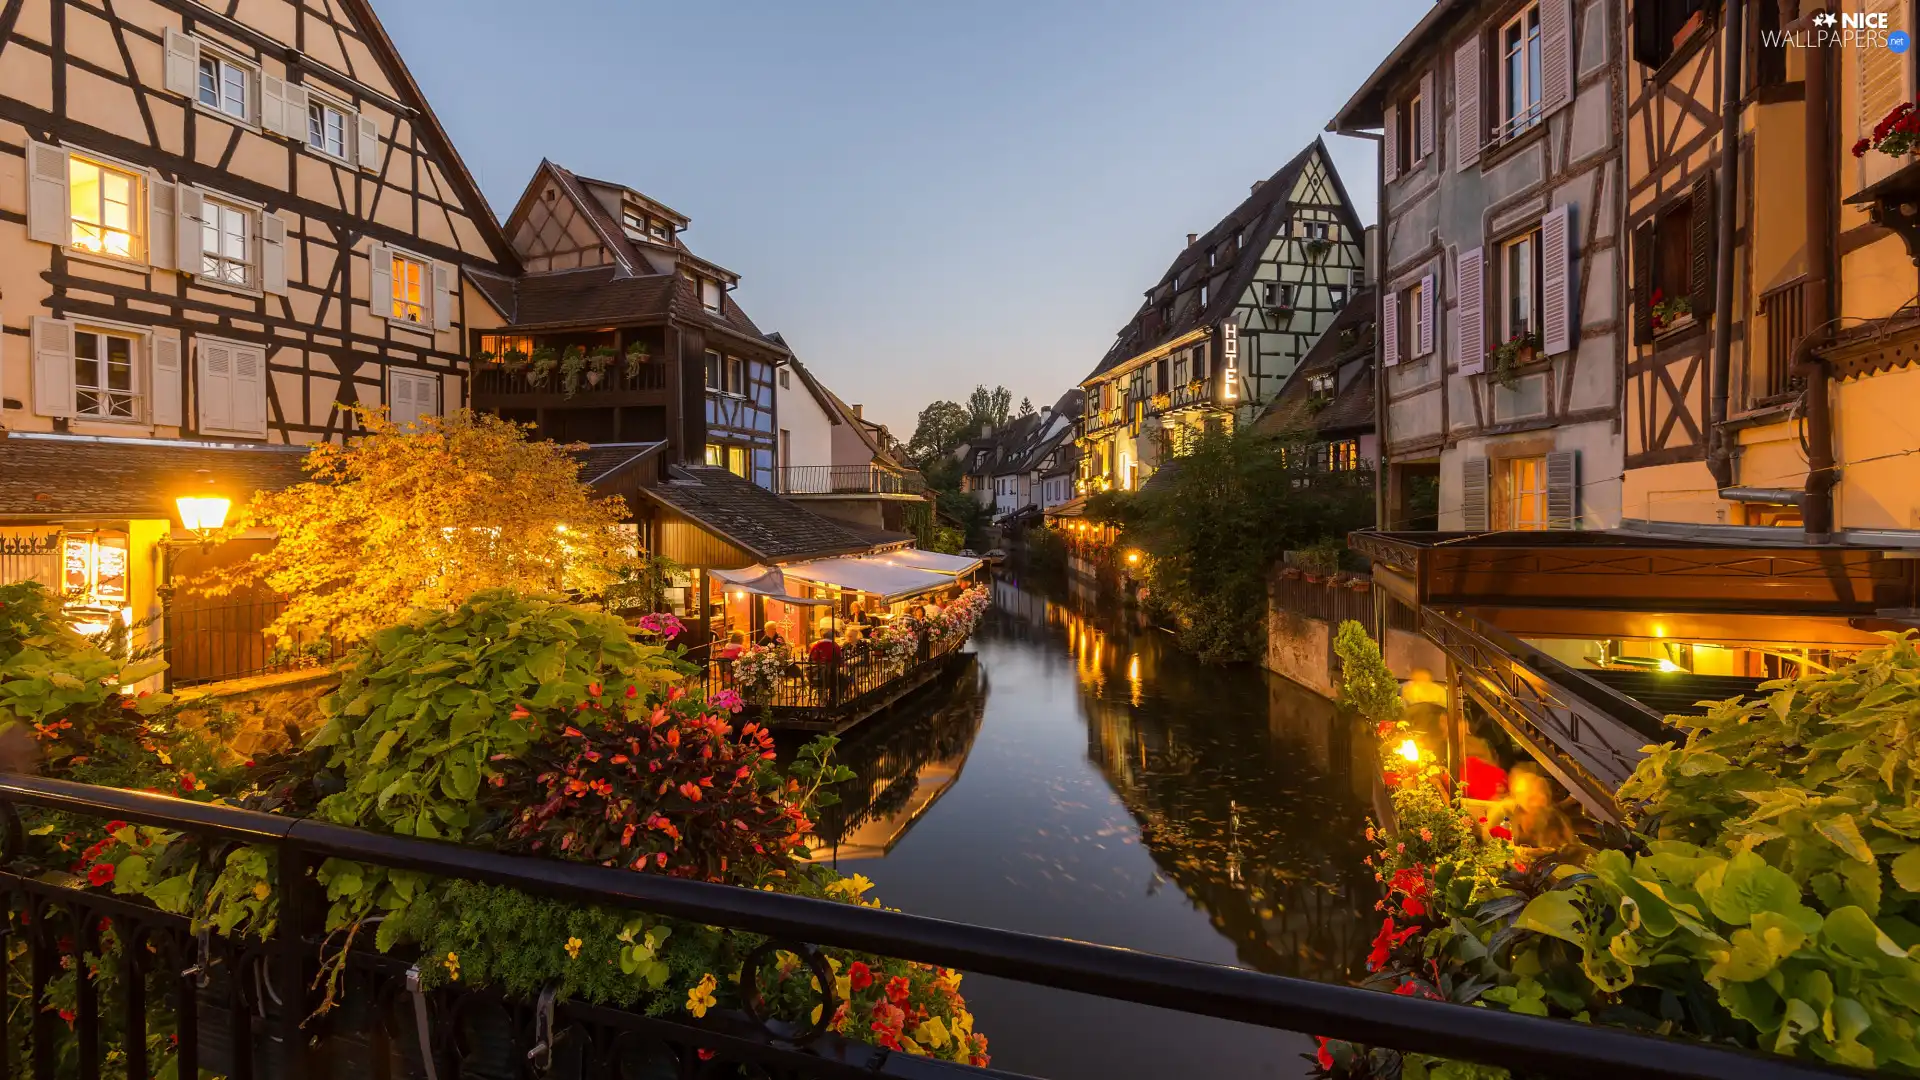 Restaurant, River, twilight, lighting, Little Venice, France, Alsace, Houses, canal, Colmar, Little Venice